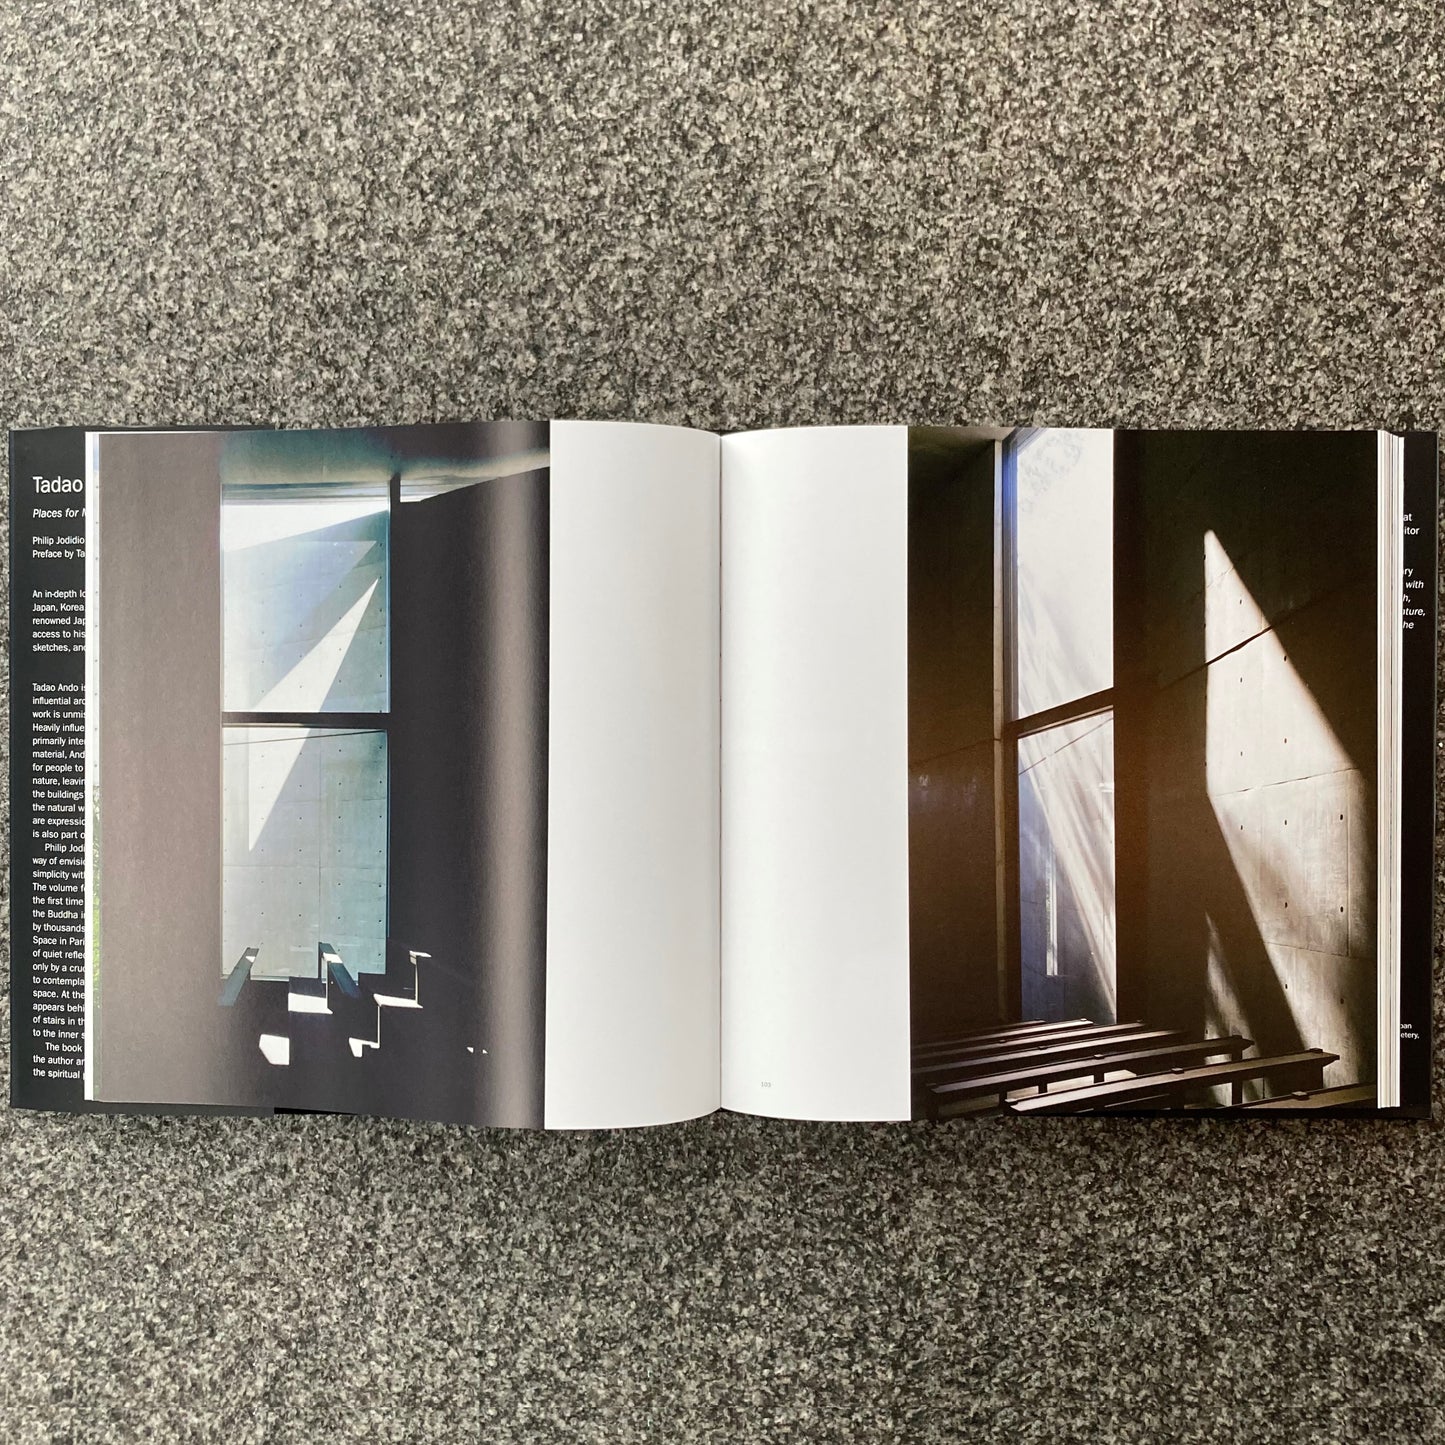 Tadao Ando: Spirit: Places for Meditation and Worship